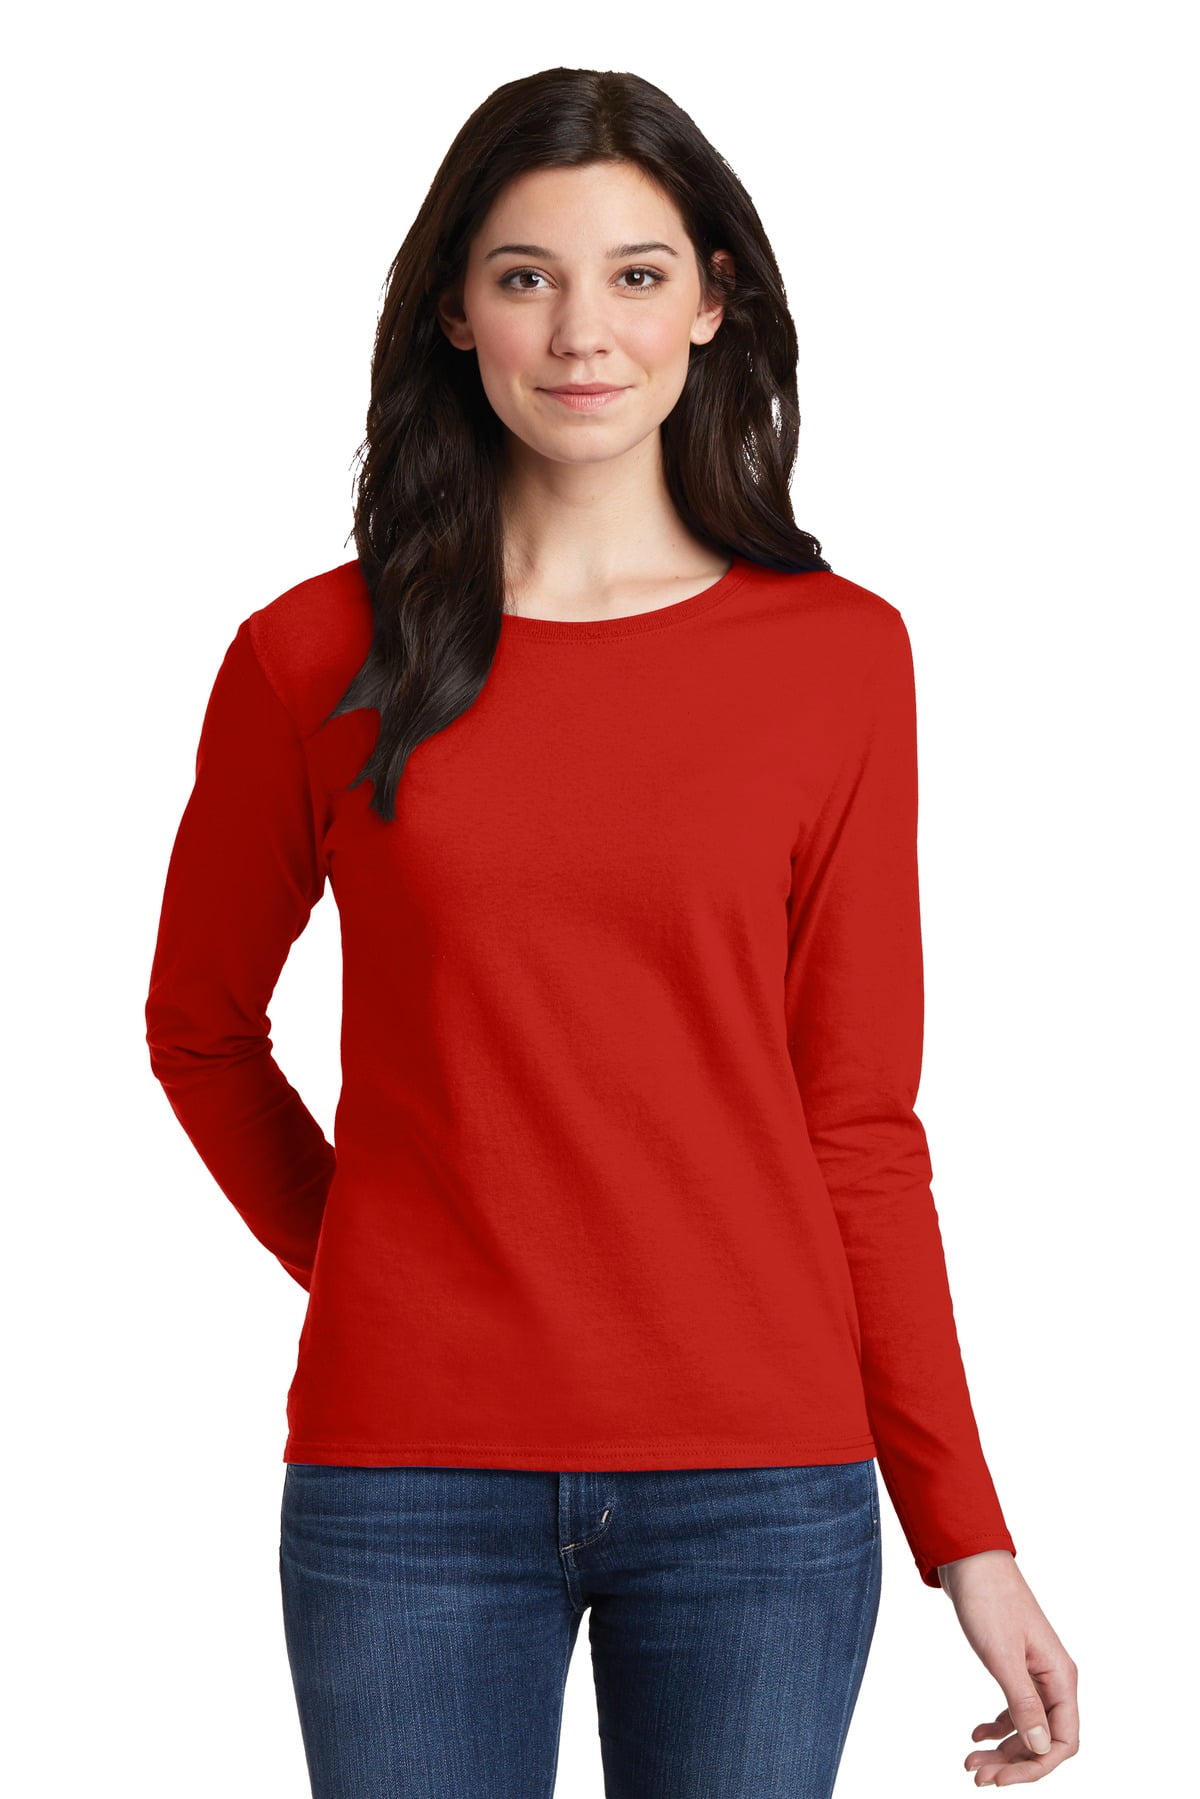 red long sleeve shirt womens